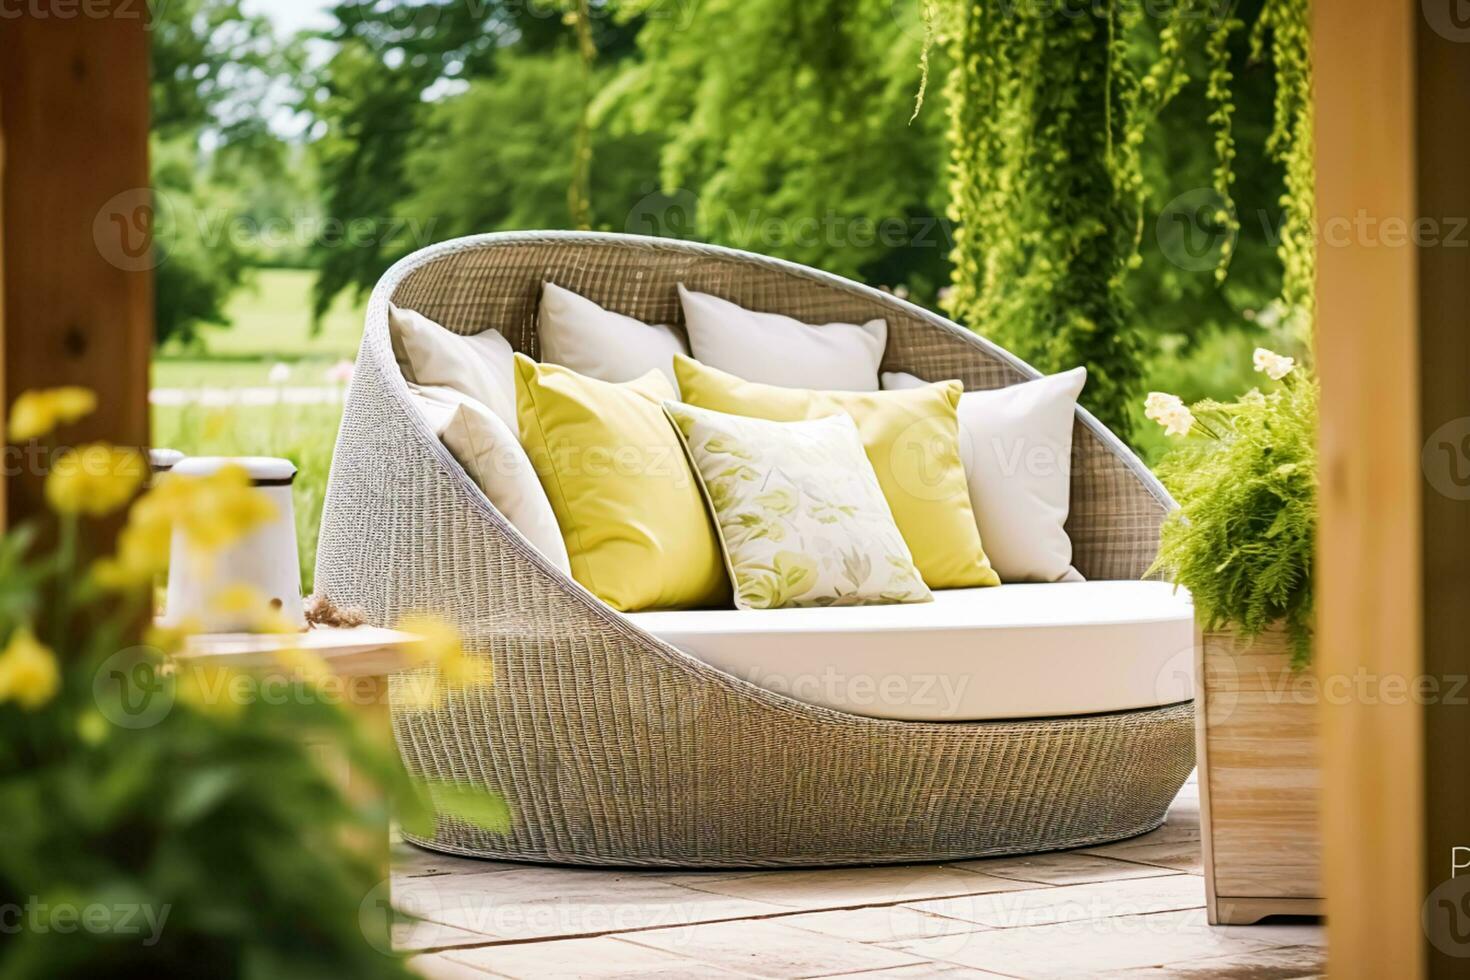 Garden furniture in the countryside in summer, home decor and interior design, generative ai photo